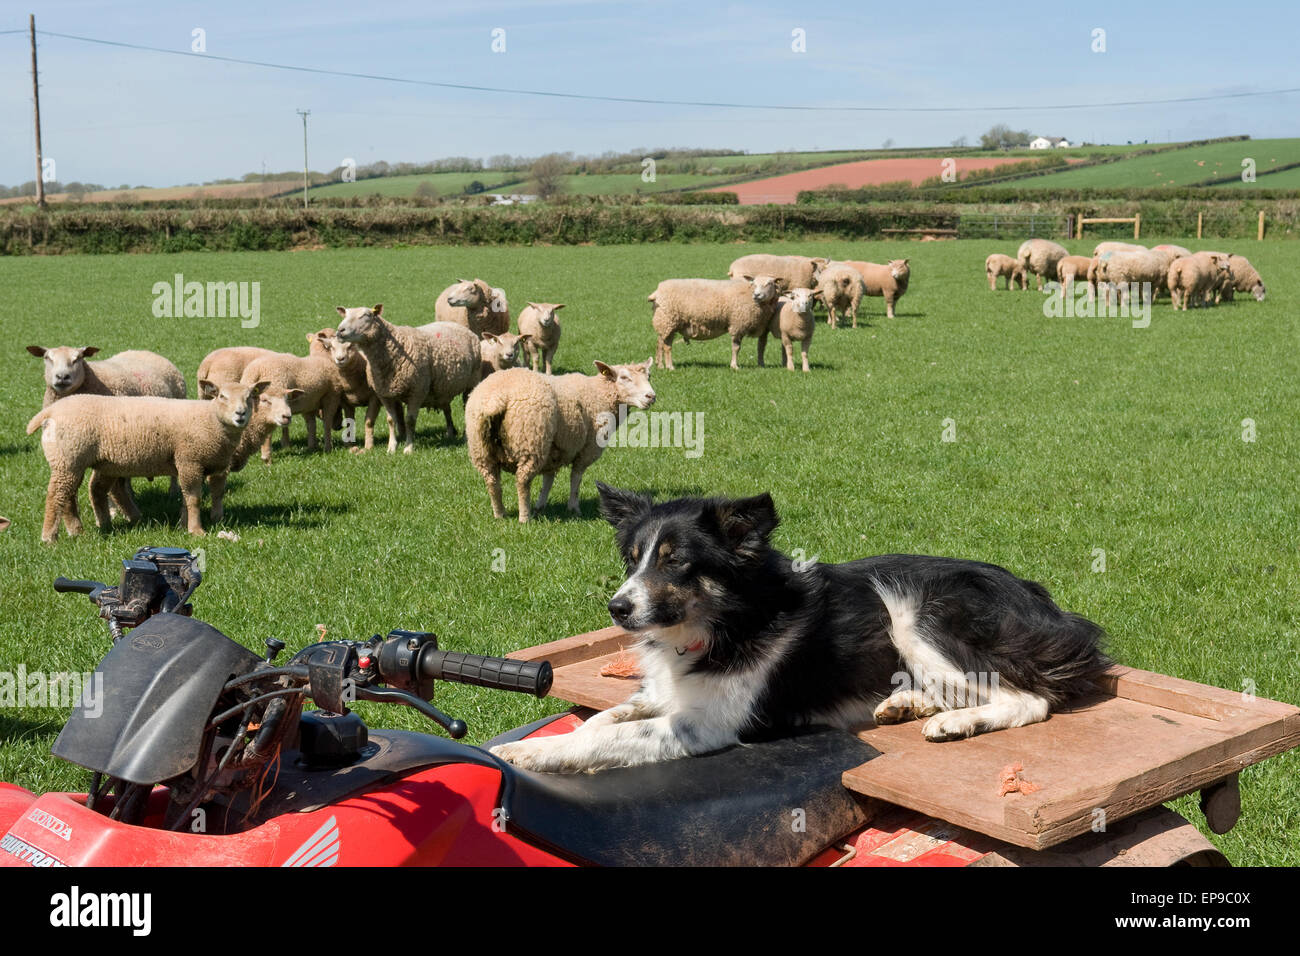 sheep dog watching sheep Stock Photo